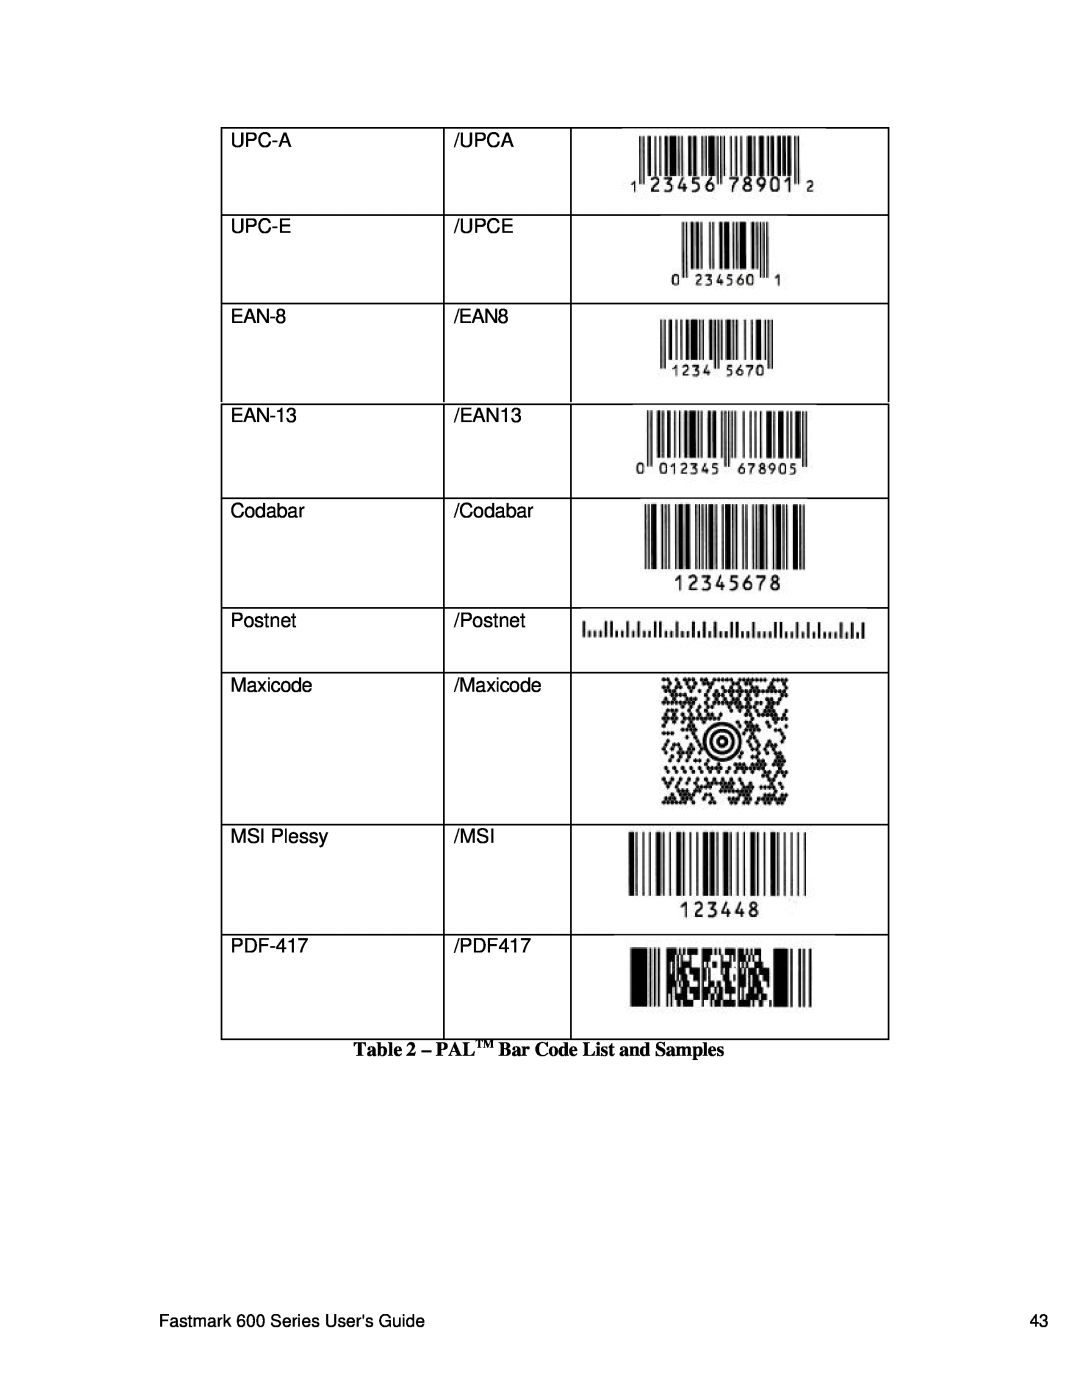 AMT Datasouth 600 manual PALTM Bar Code List and Samples 